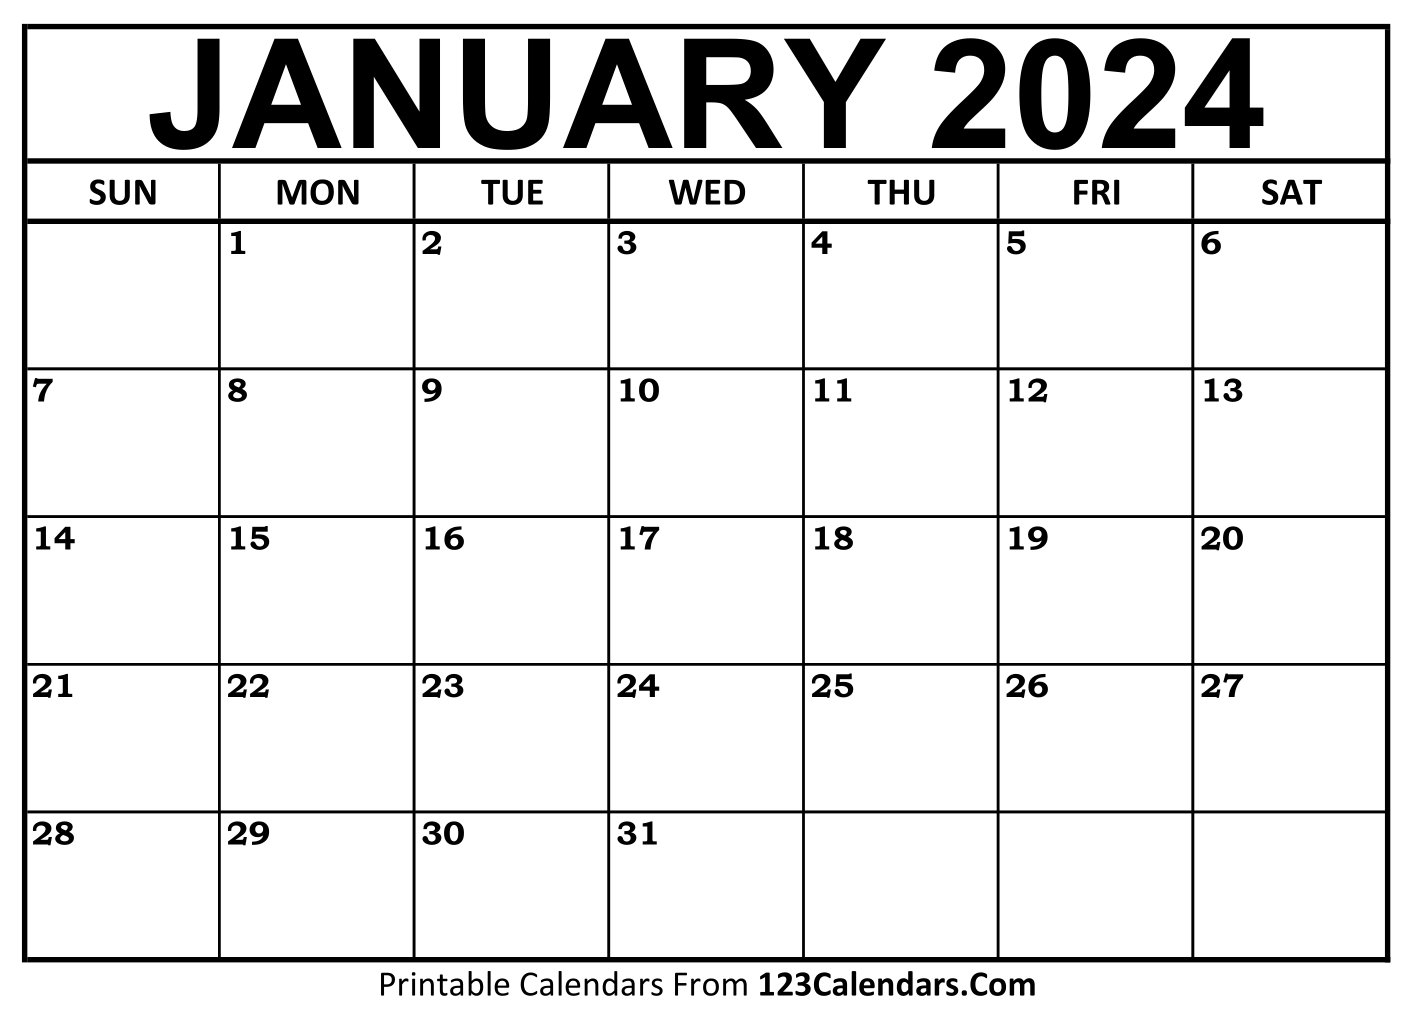 Printable January 2024 Calendar Templates - 123Calendars for January 2024 Blank Calendar Printable